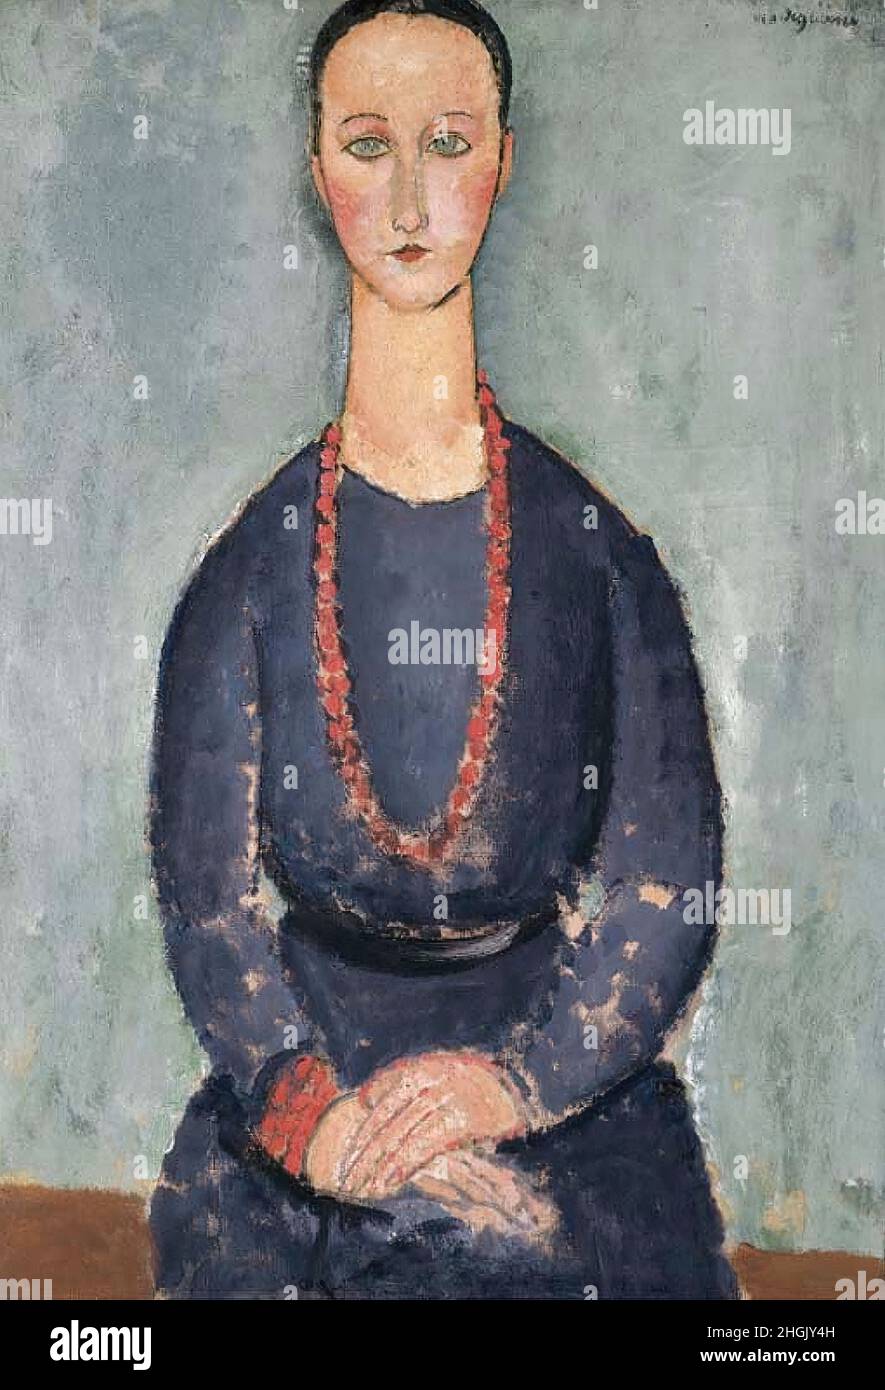 Modigliani Amedeo - Collection privée - Donna con collana rossa - 1918 - huile sur toile 92,5 x 65,3 cm - Banque D'Images